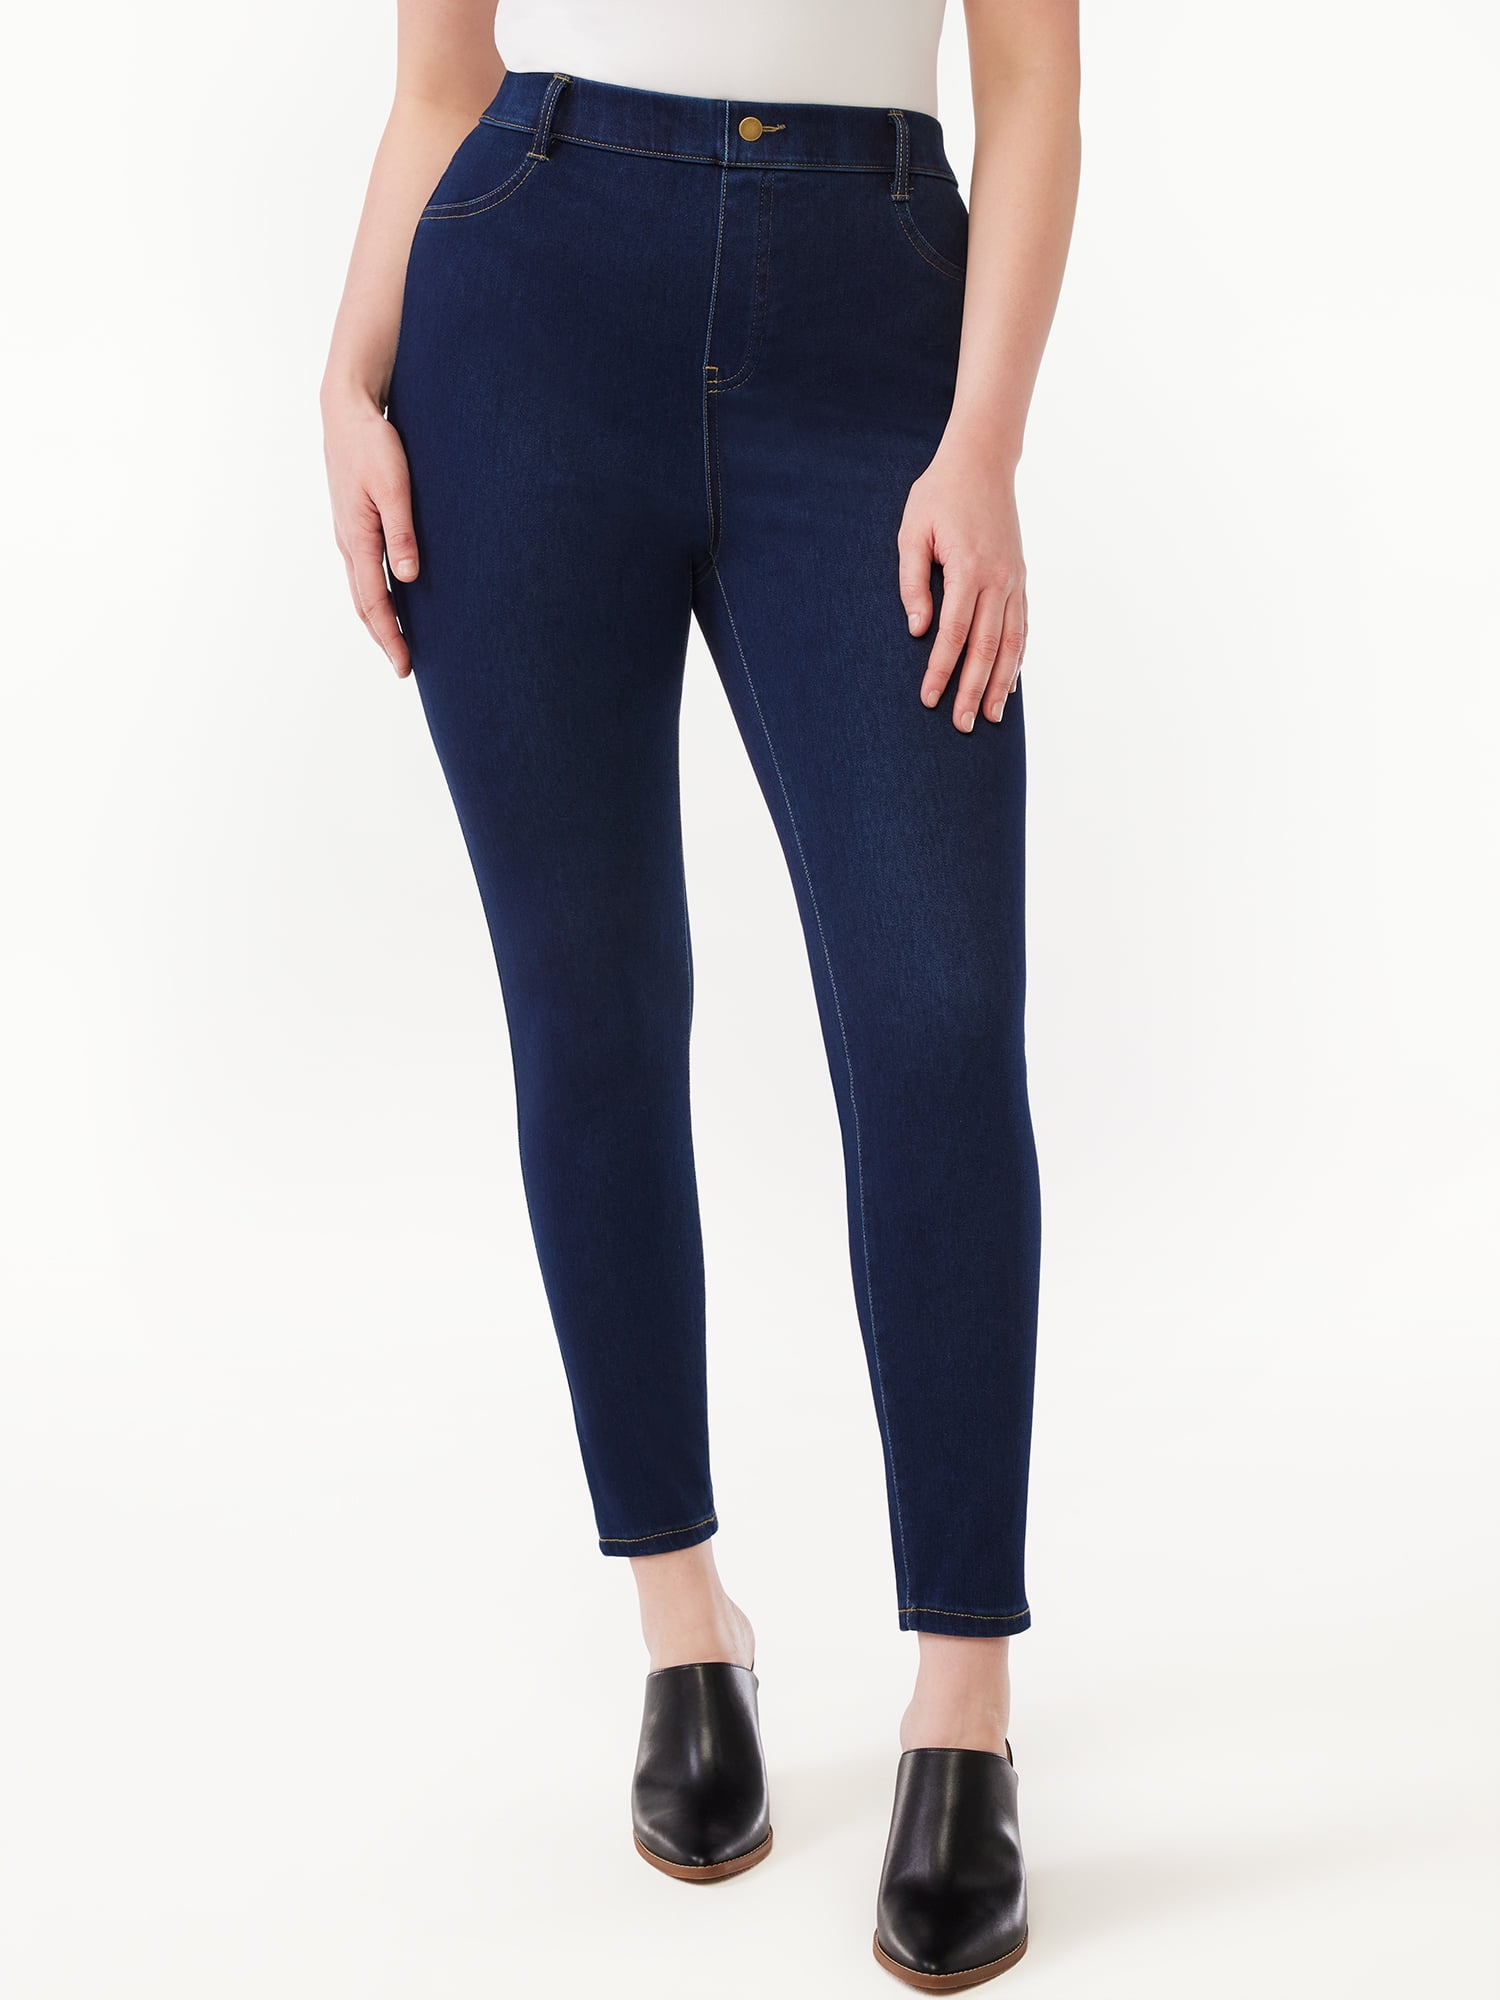 TIME AND TRU Jeans Womens 14 Blue High Rise Jegging Mid Wash Stretch Denim  30x29 $15.99 - PicClick